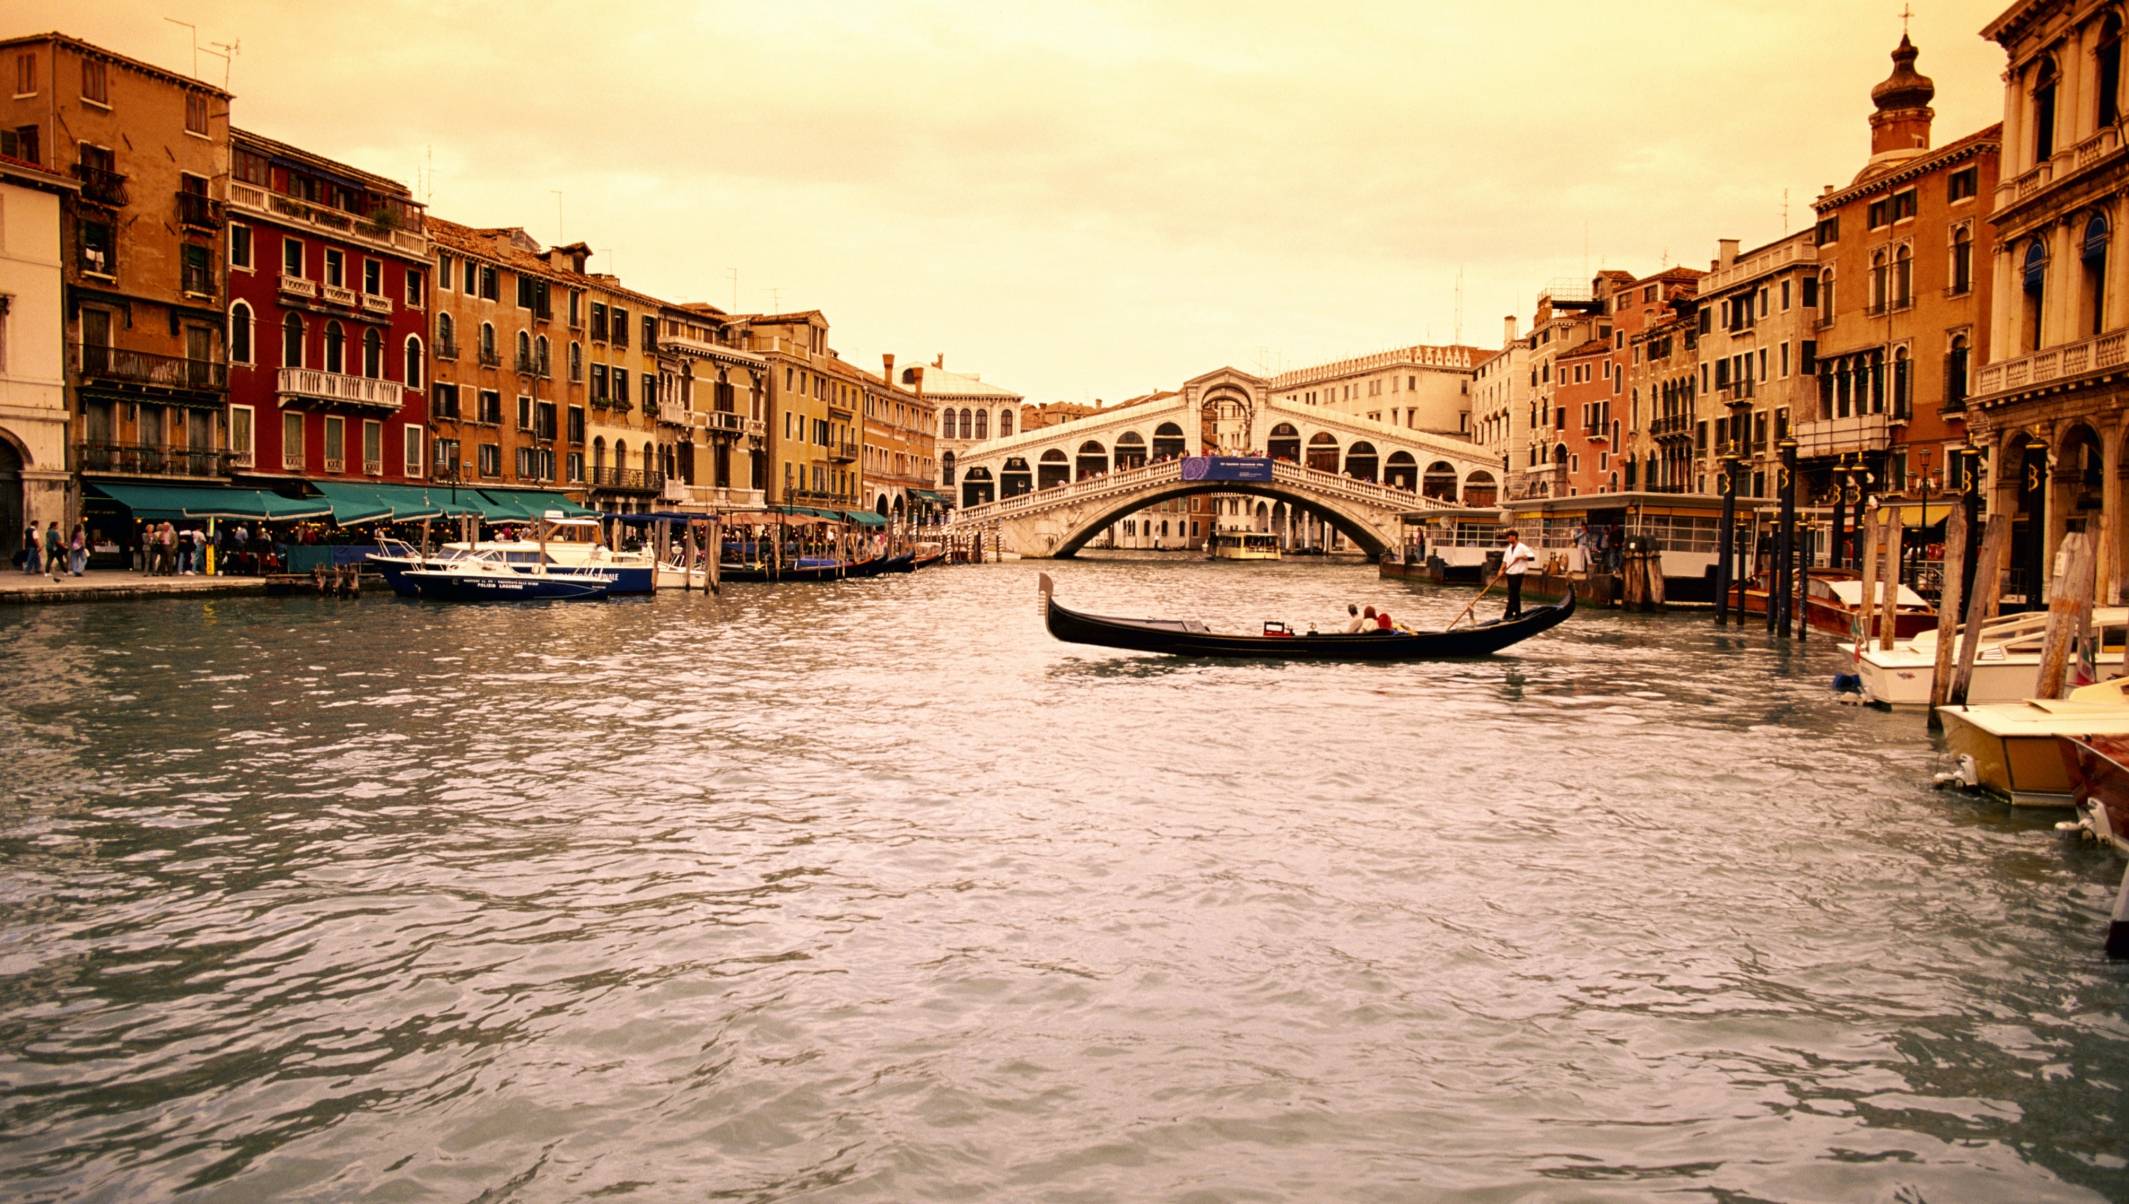 Venice Gondola HD Wallpaper Background Image